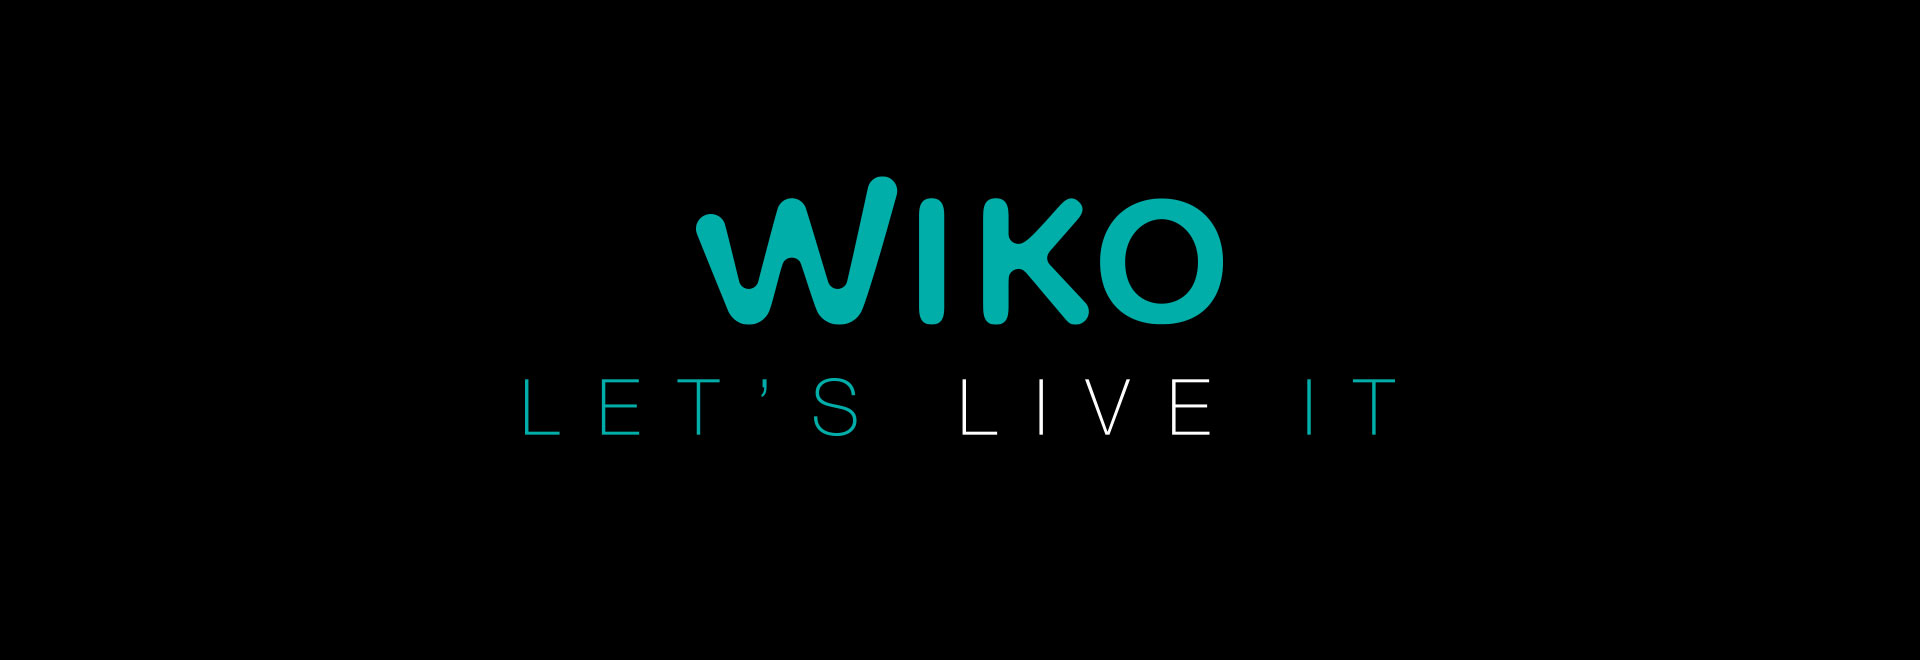 Wiko Lets live it - Logo mit Claim